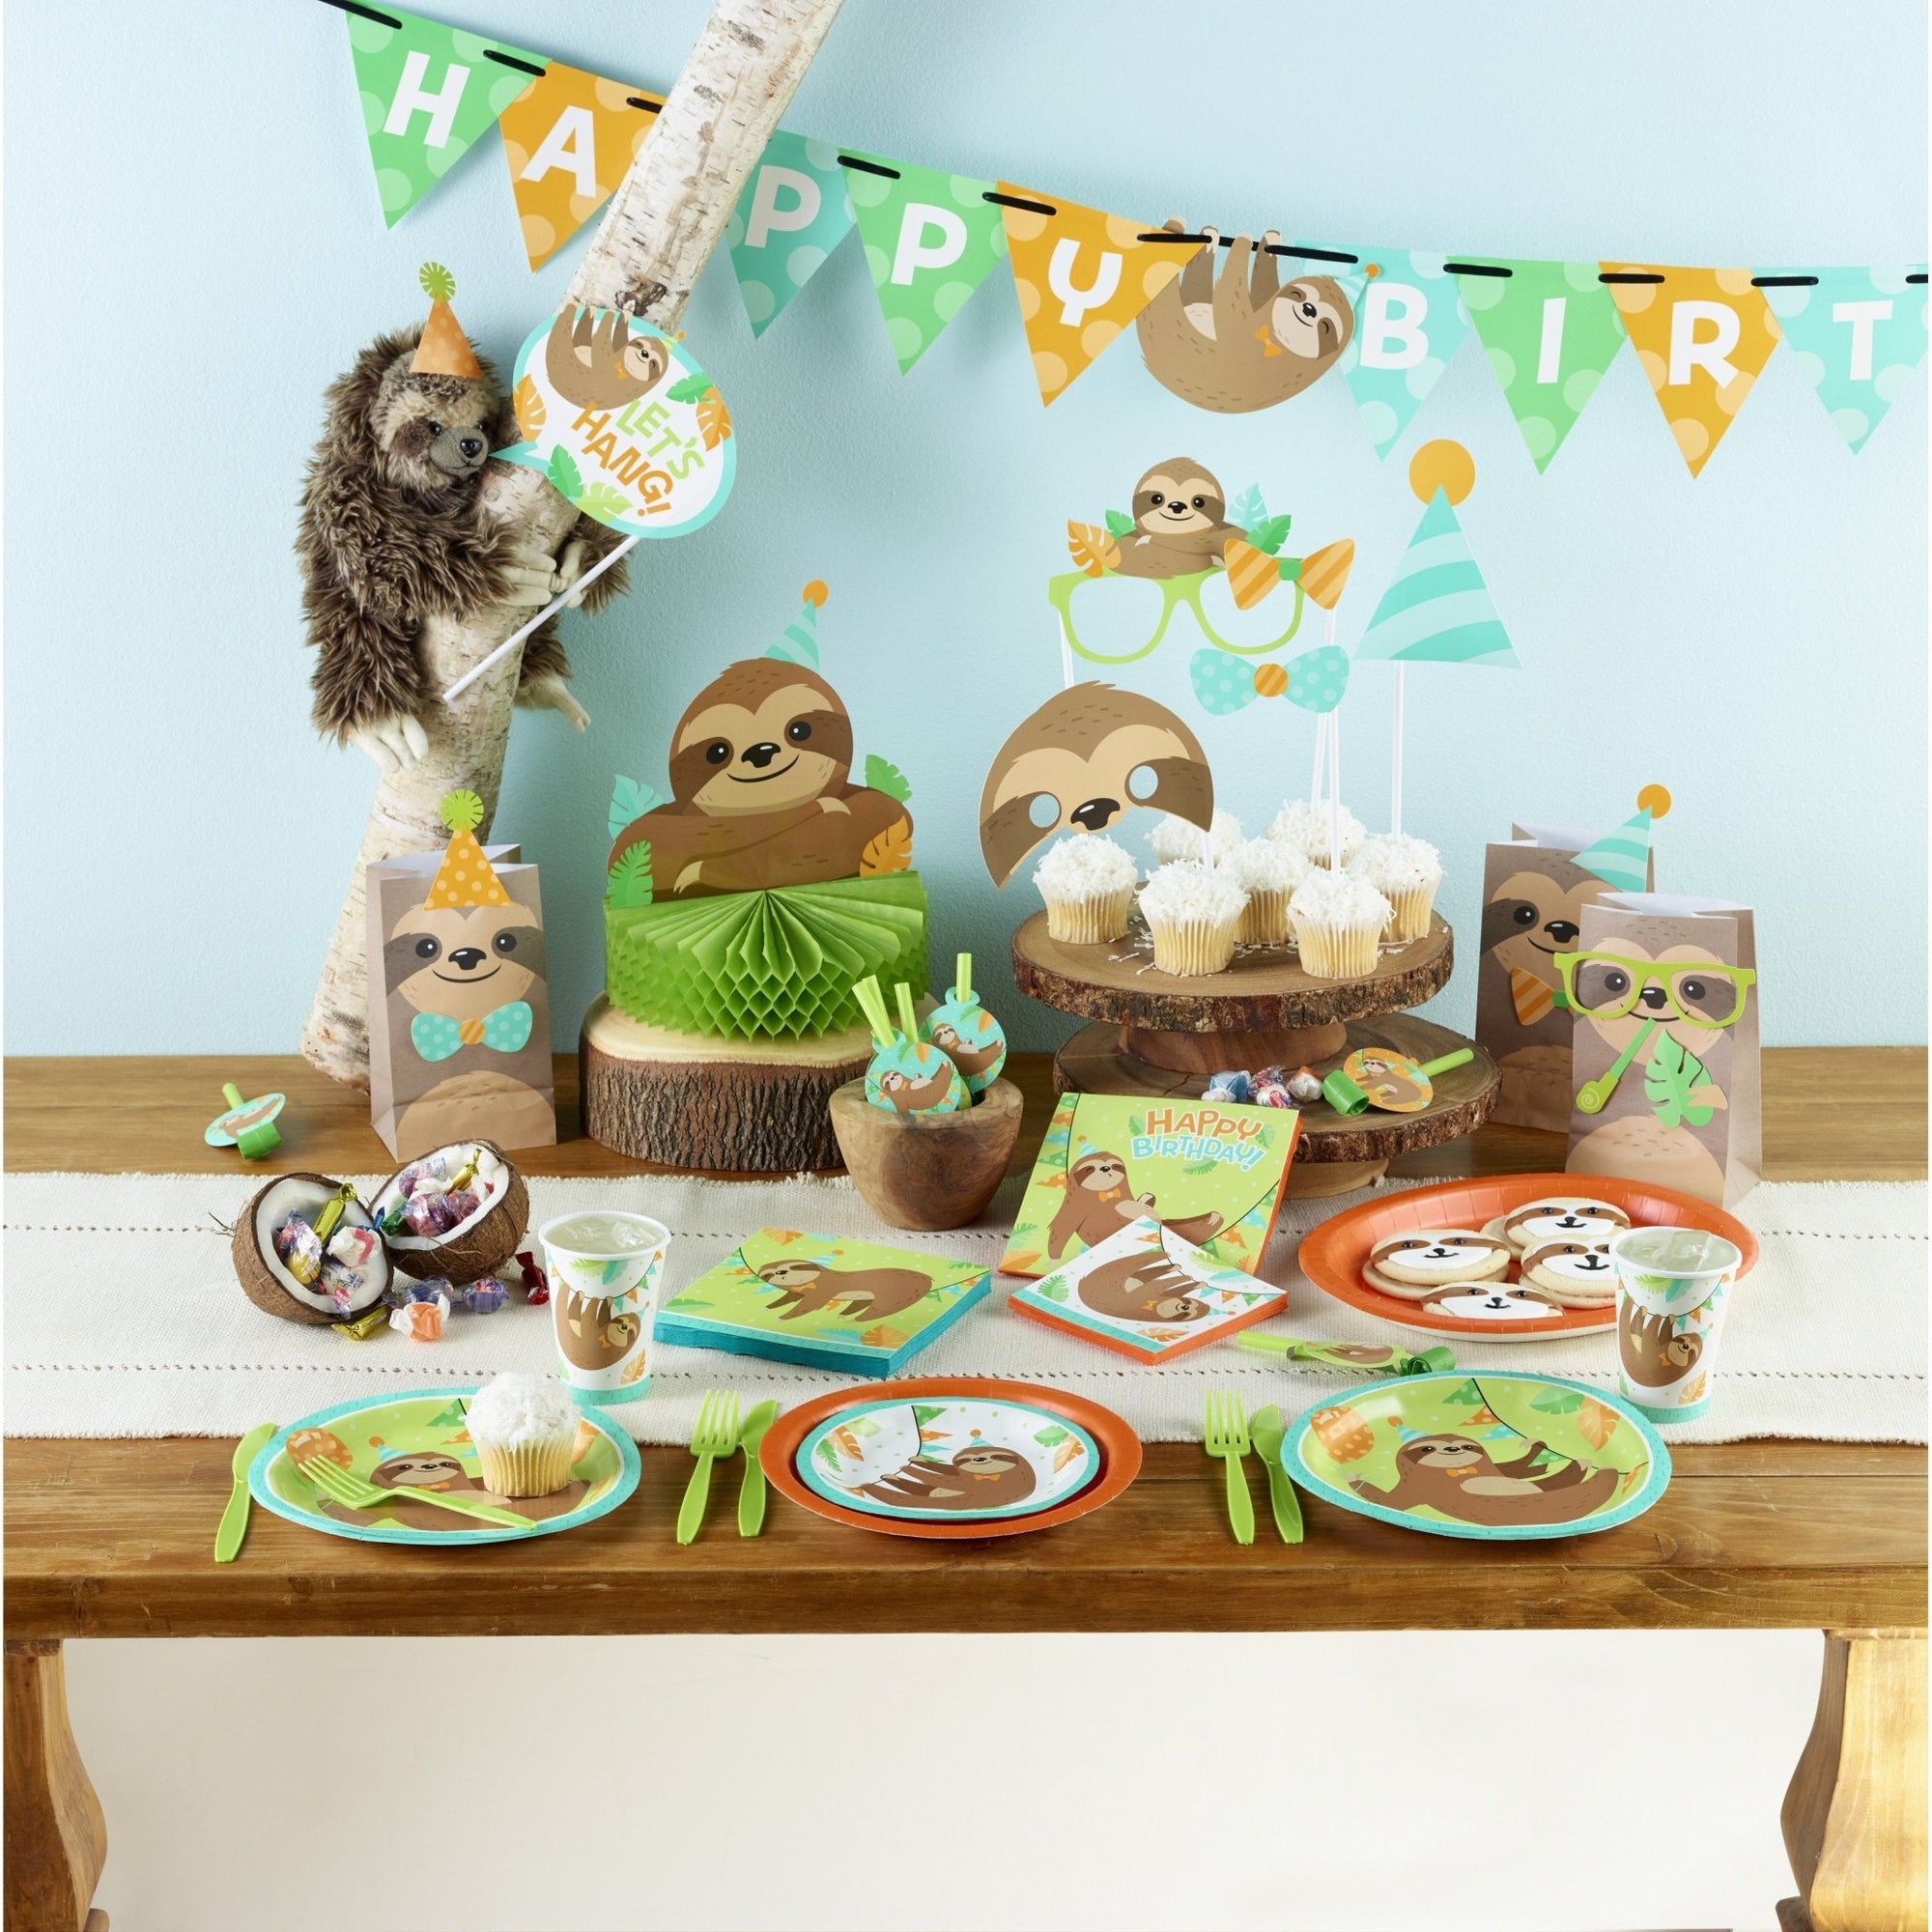 Sloth Party 7" Cake Plates - Stesha Party